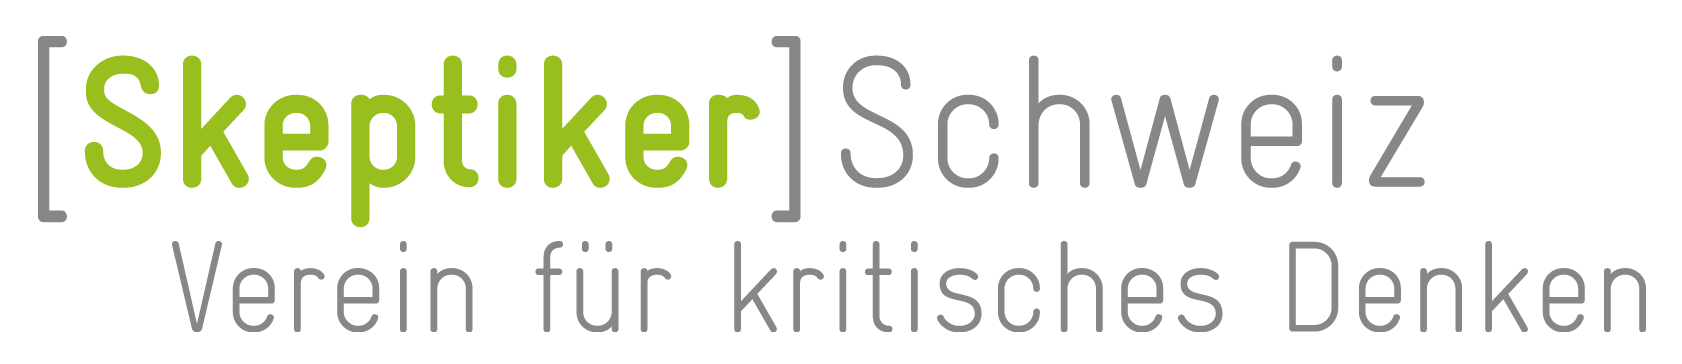 Skeptiker logo